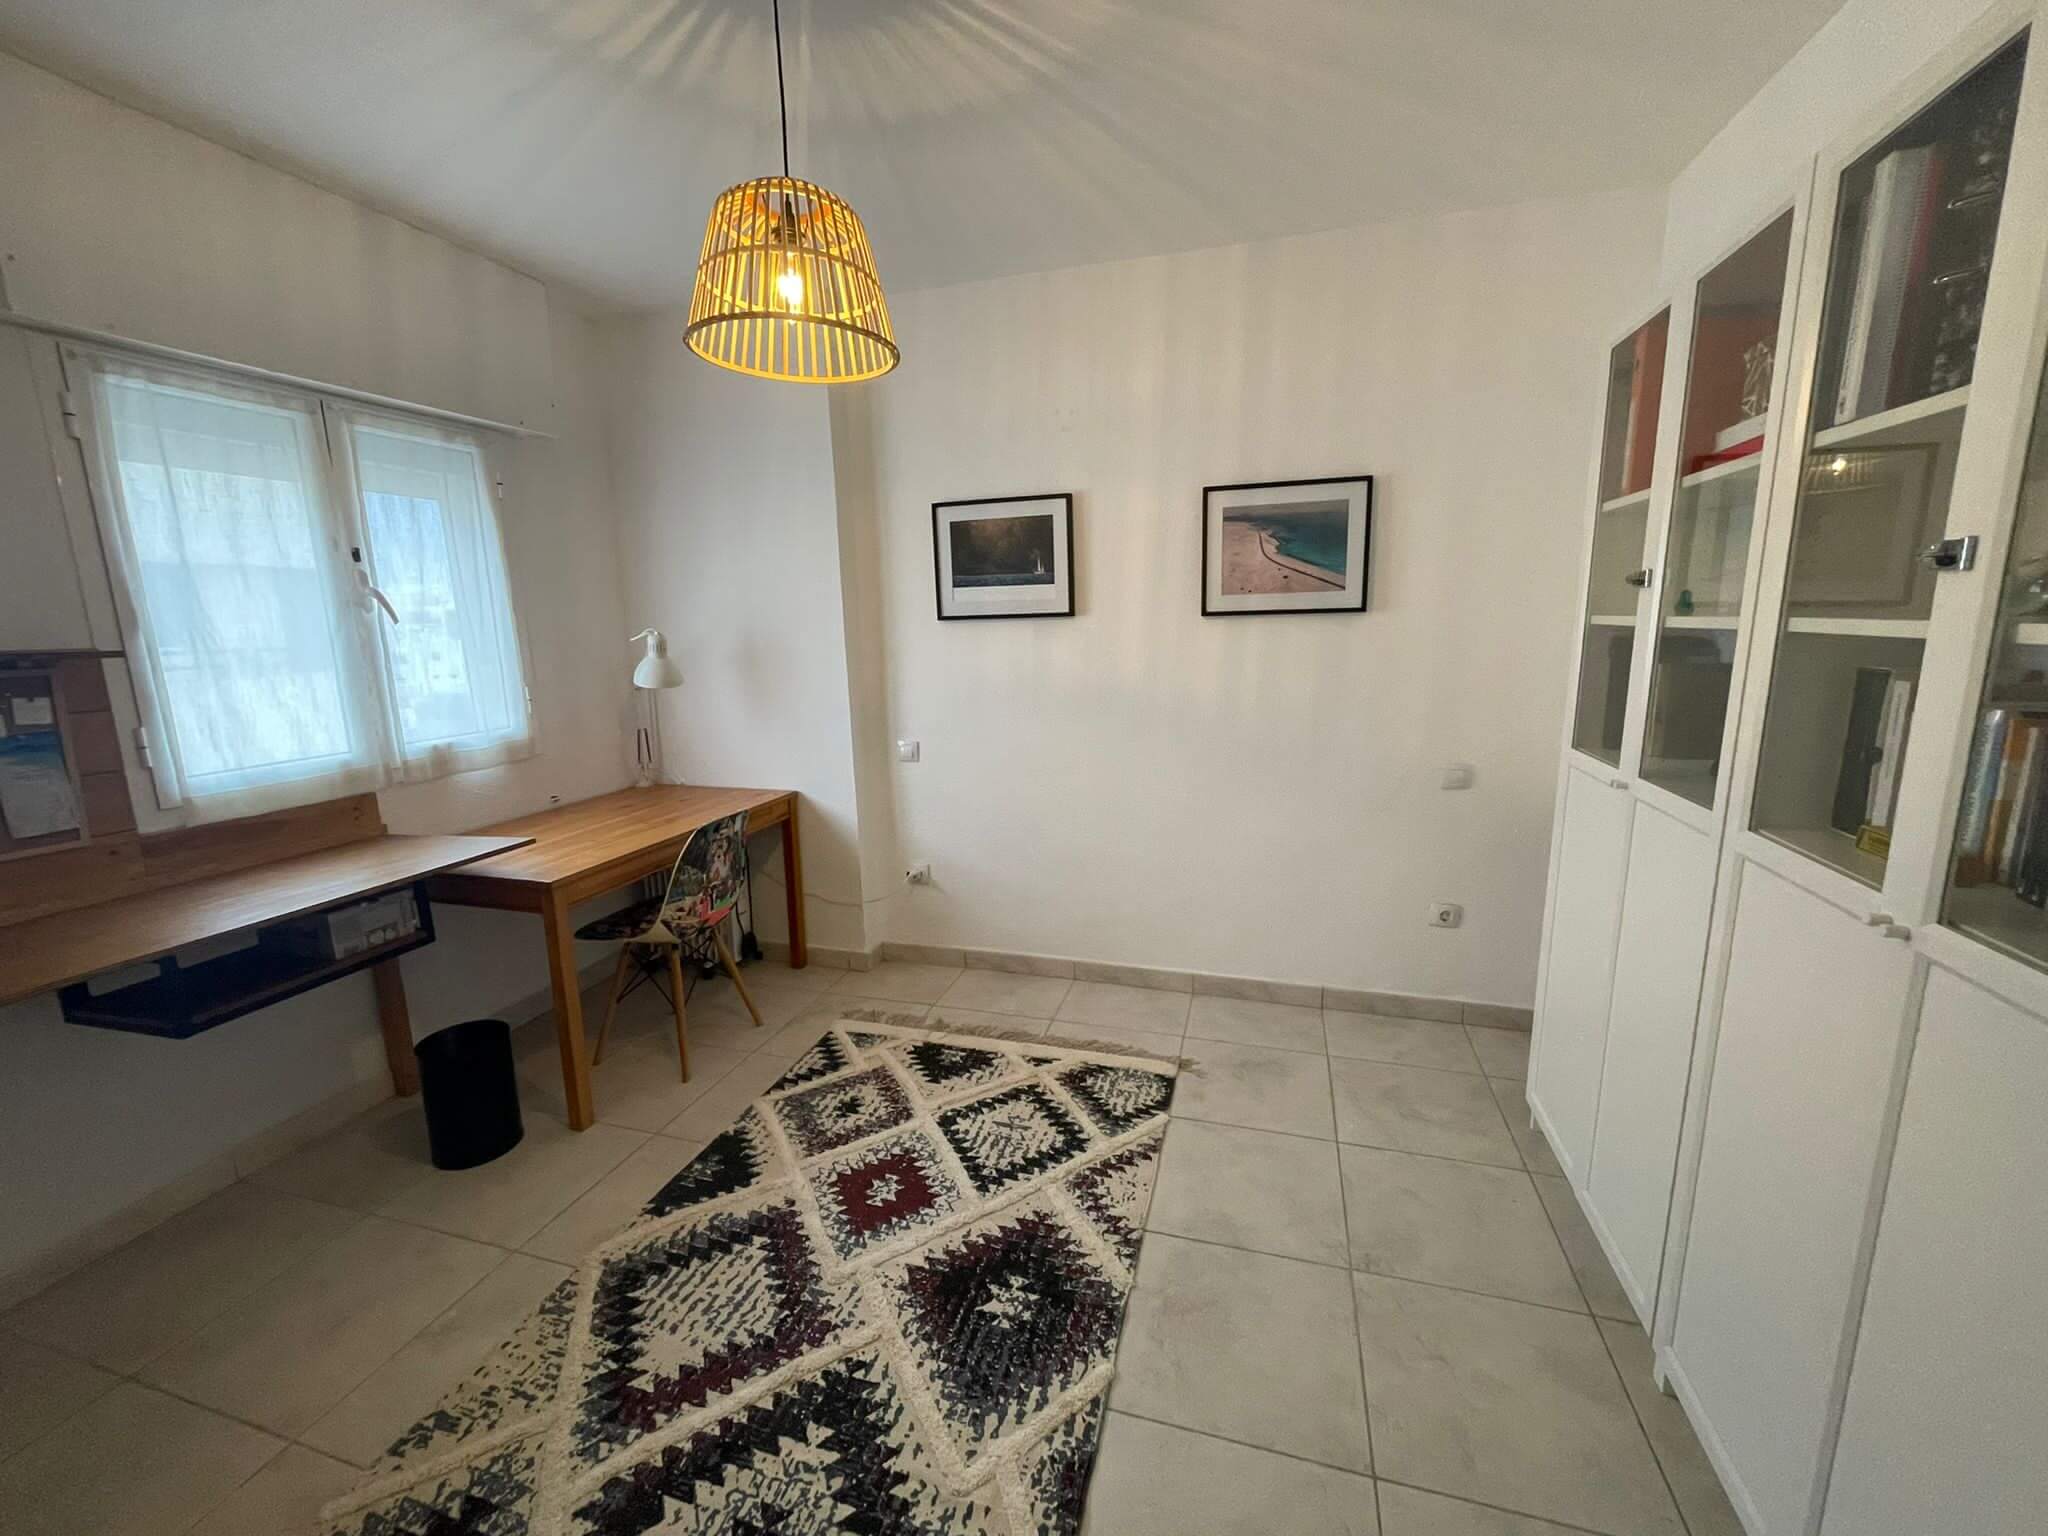 Llargia - Beautiful furnished apartment for rent in Fuerteventura